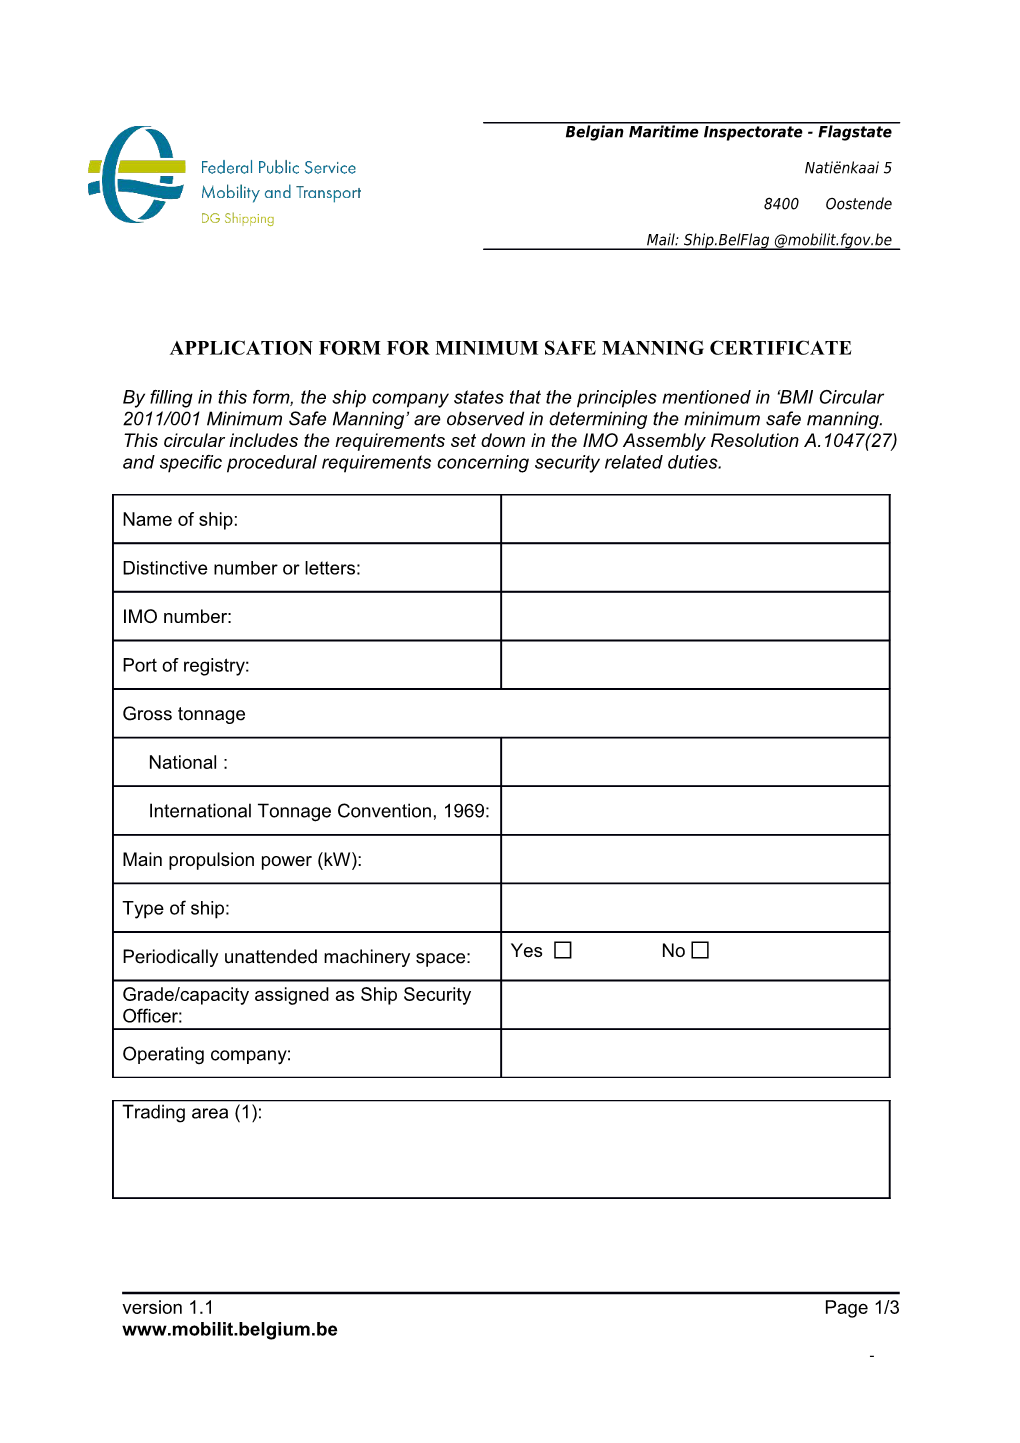 Application Form for Minimum Safe Manning Certificate